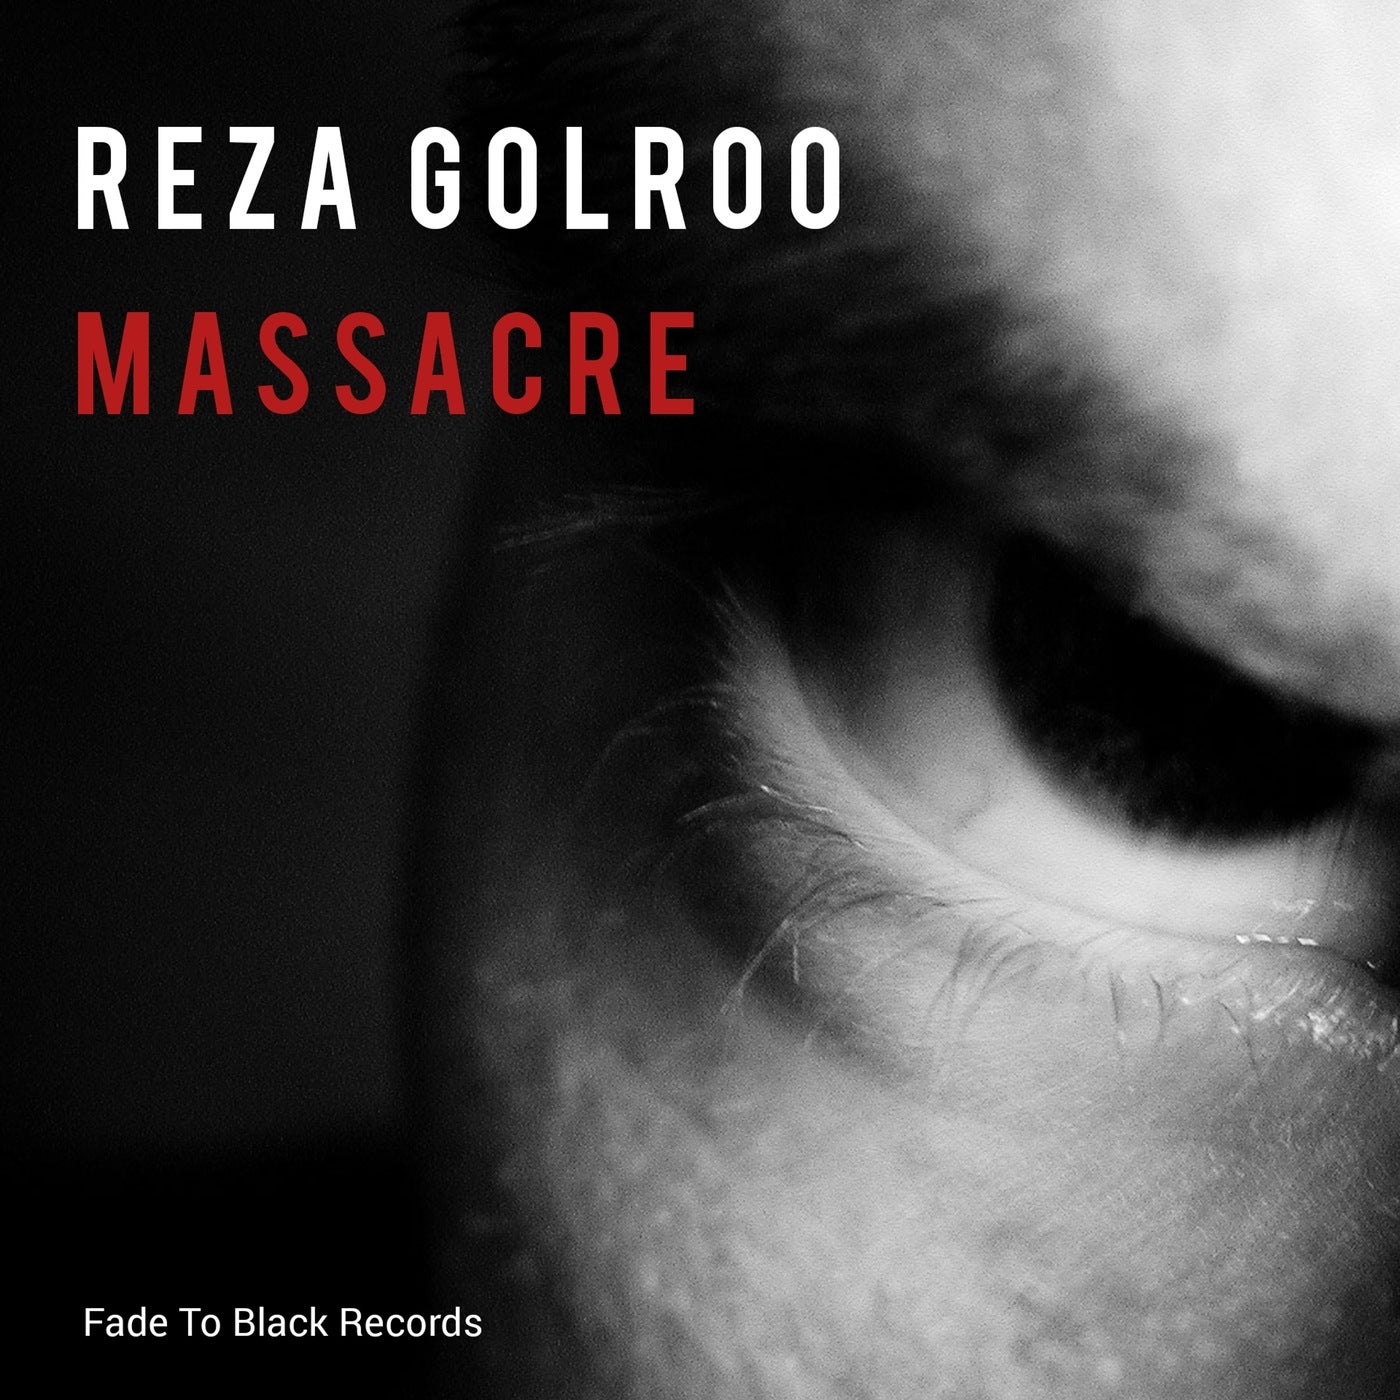 Reza Golroo - Massacre [FTB008]